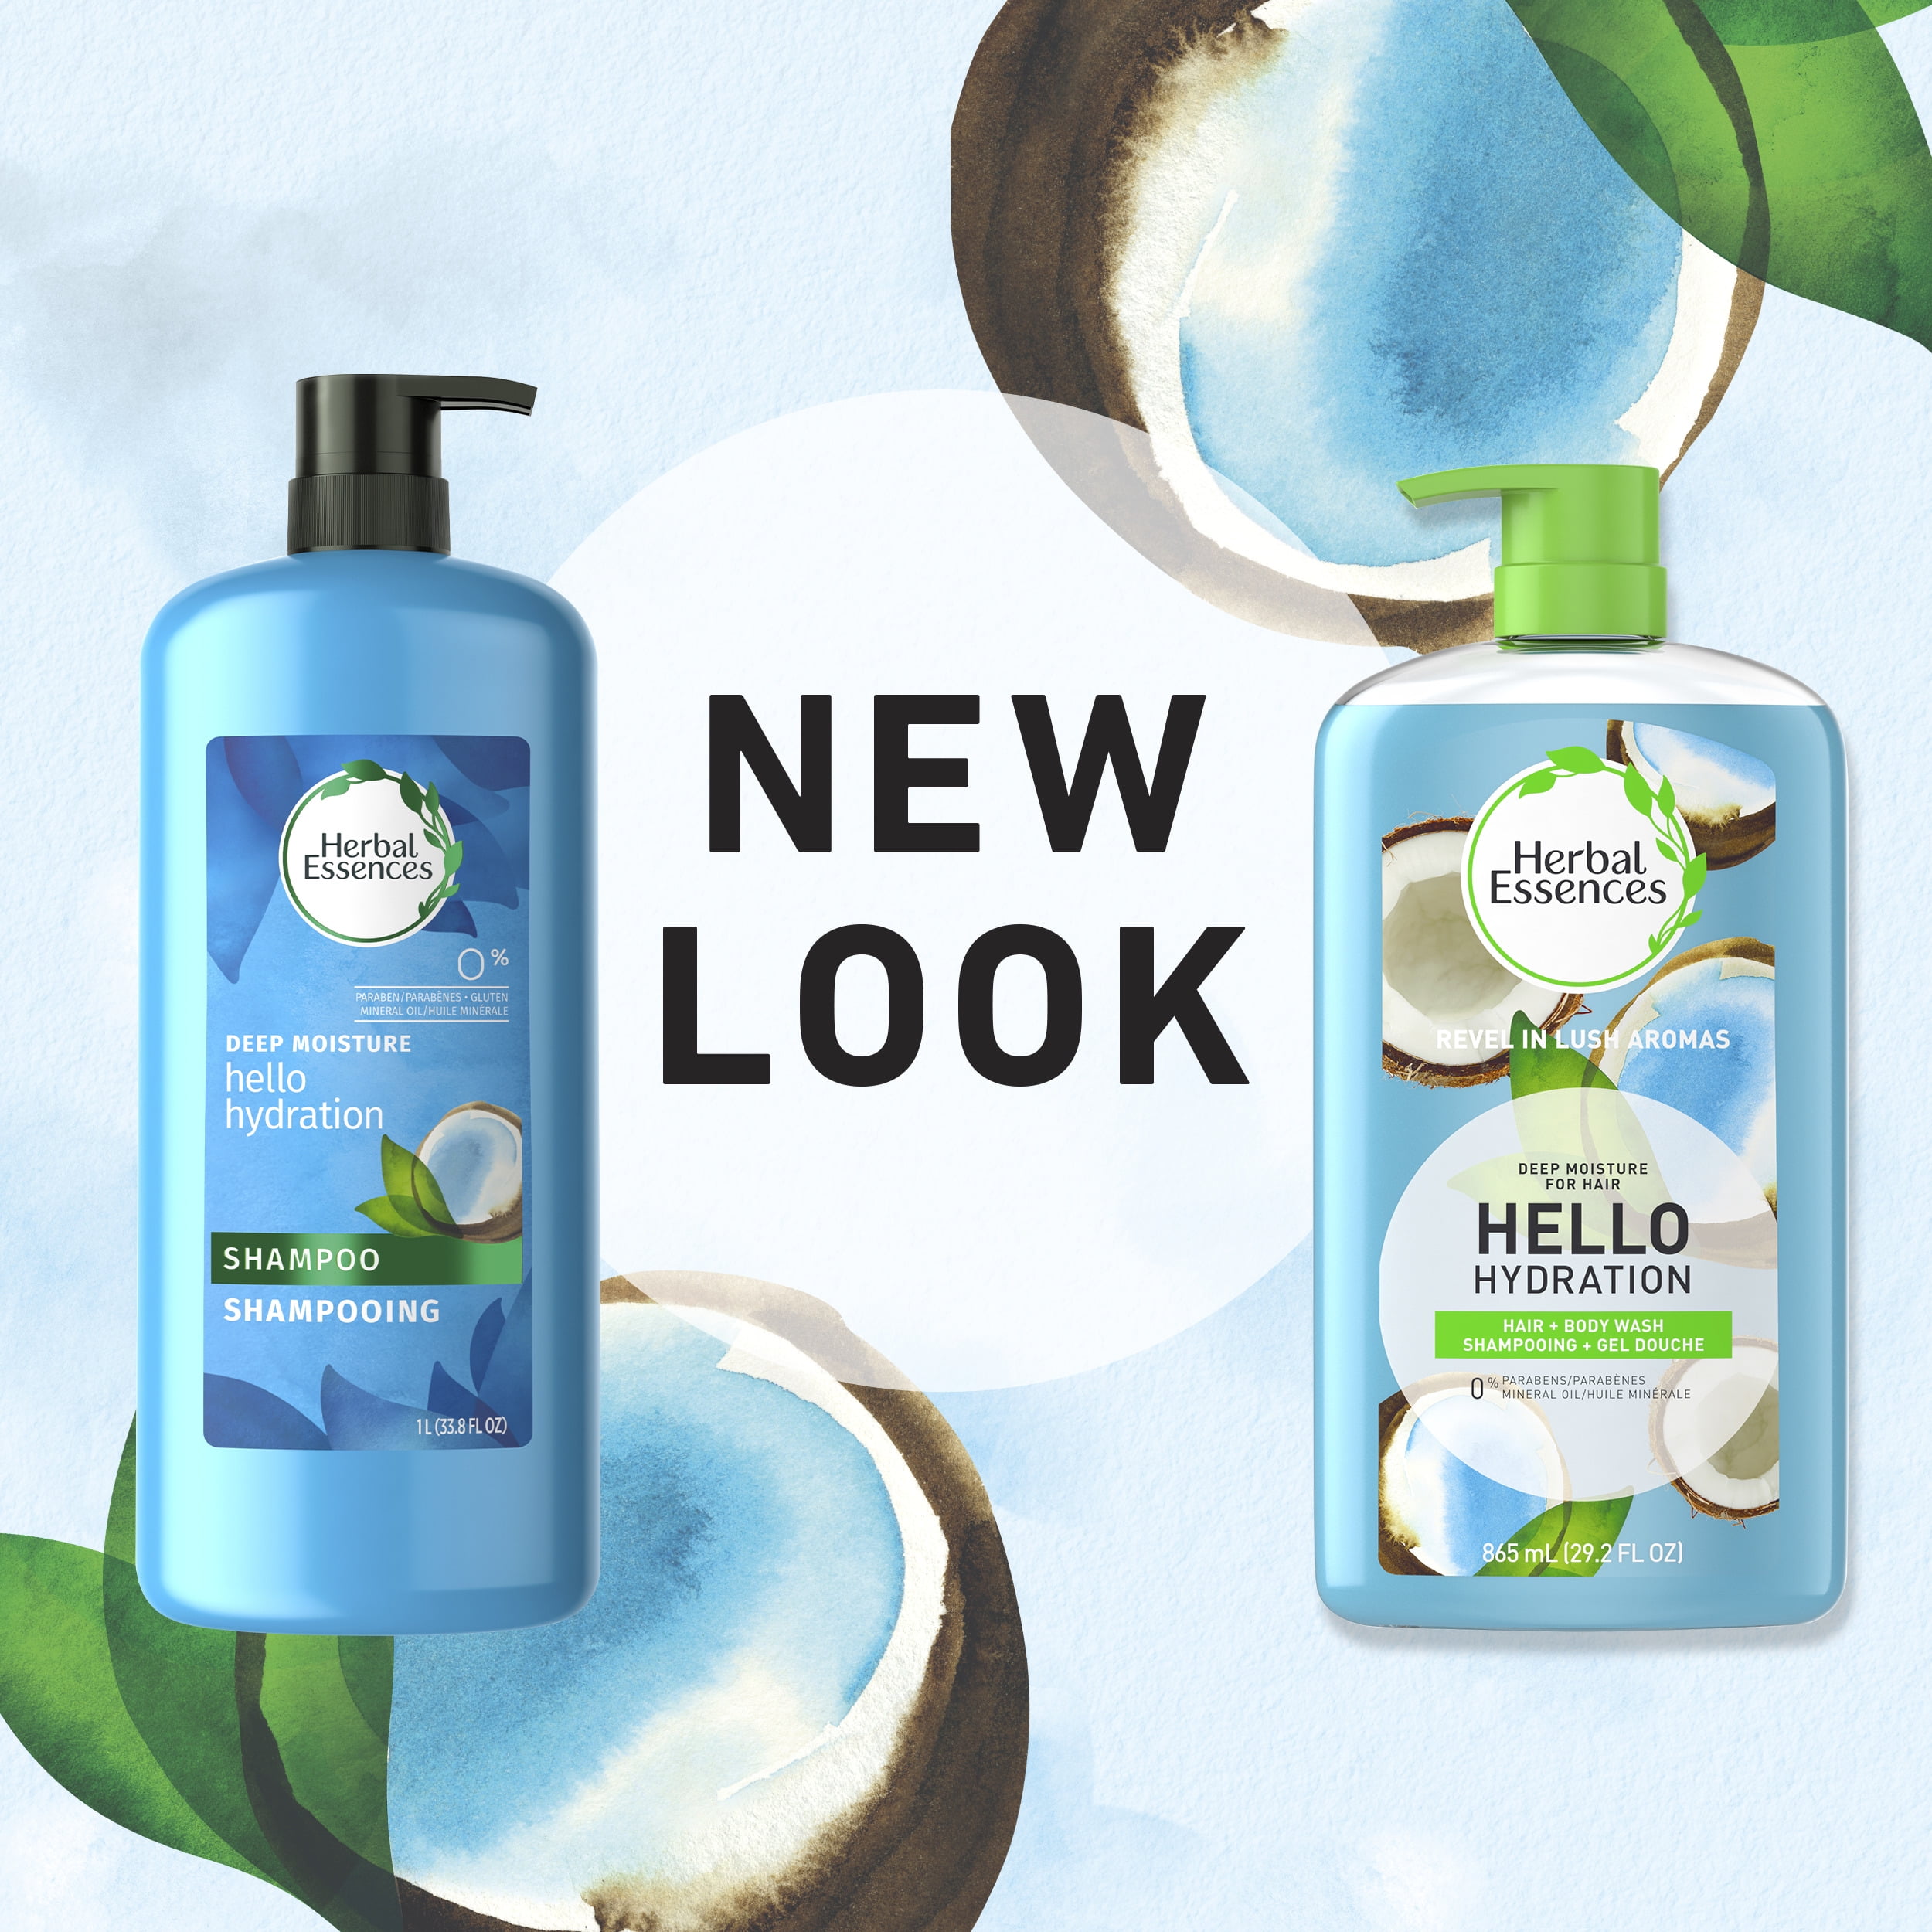 Herbal Essences Hello Hydration Shampoo and Conditioner - Walmart.com